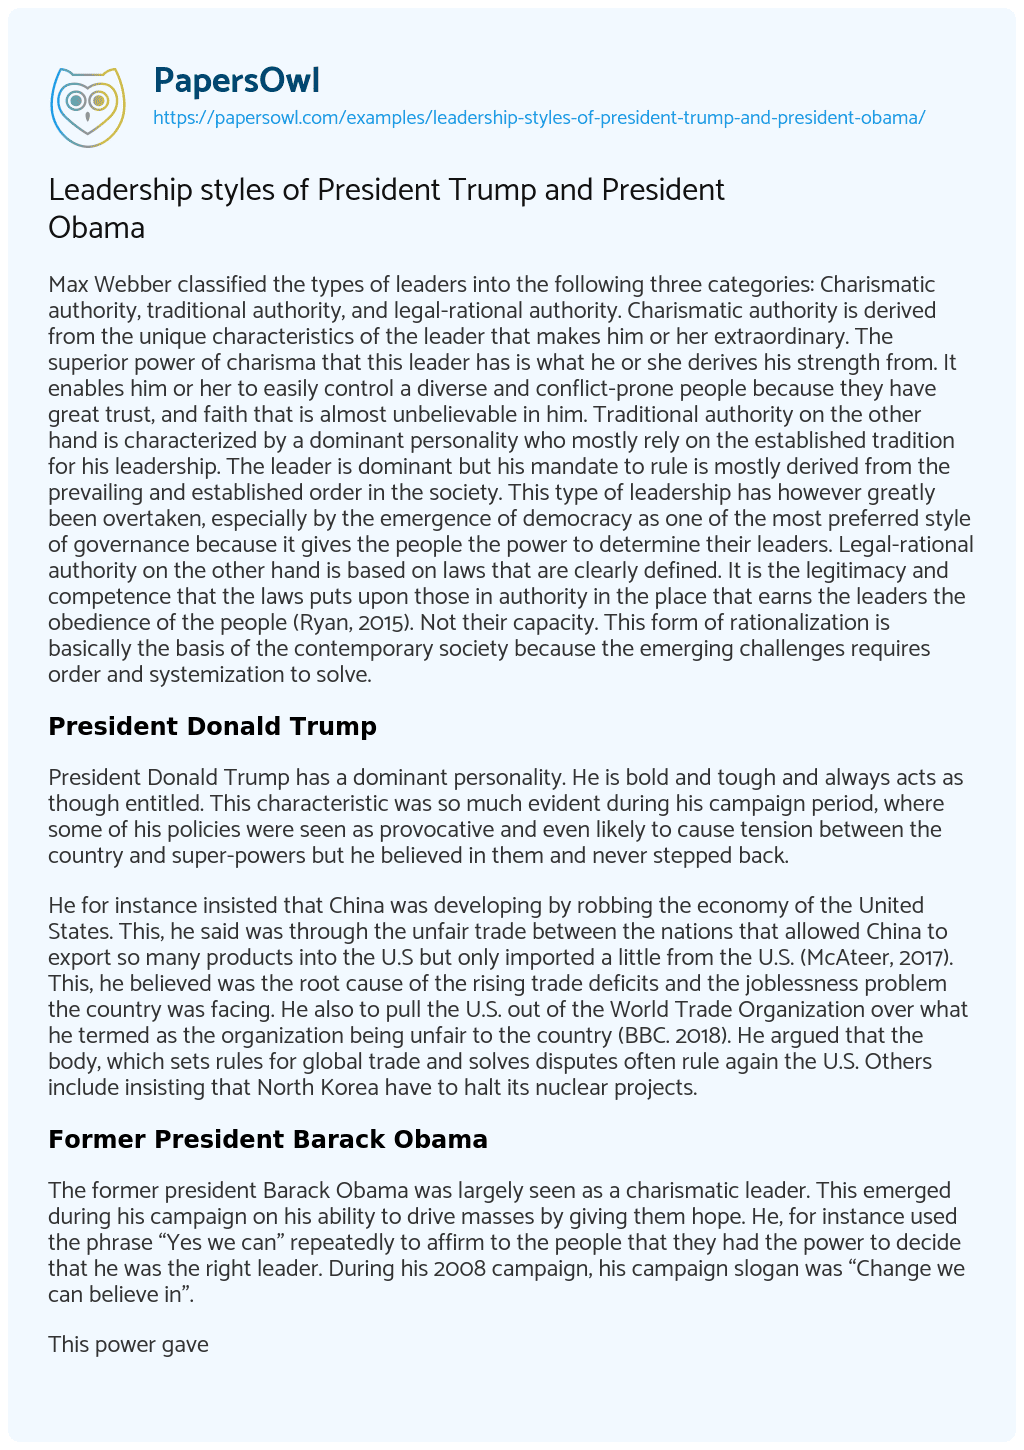 Leadership Styles of President Trump and President Obama essay